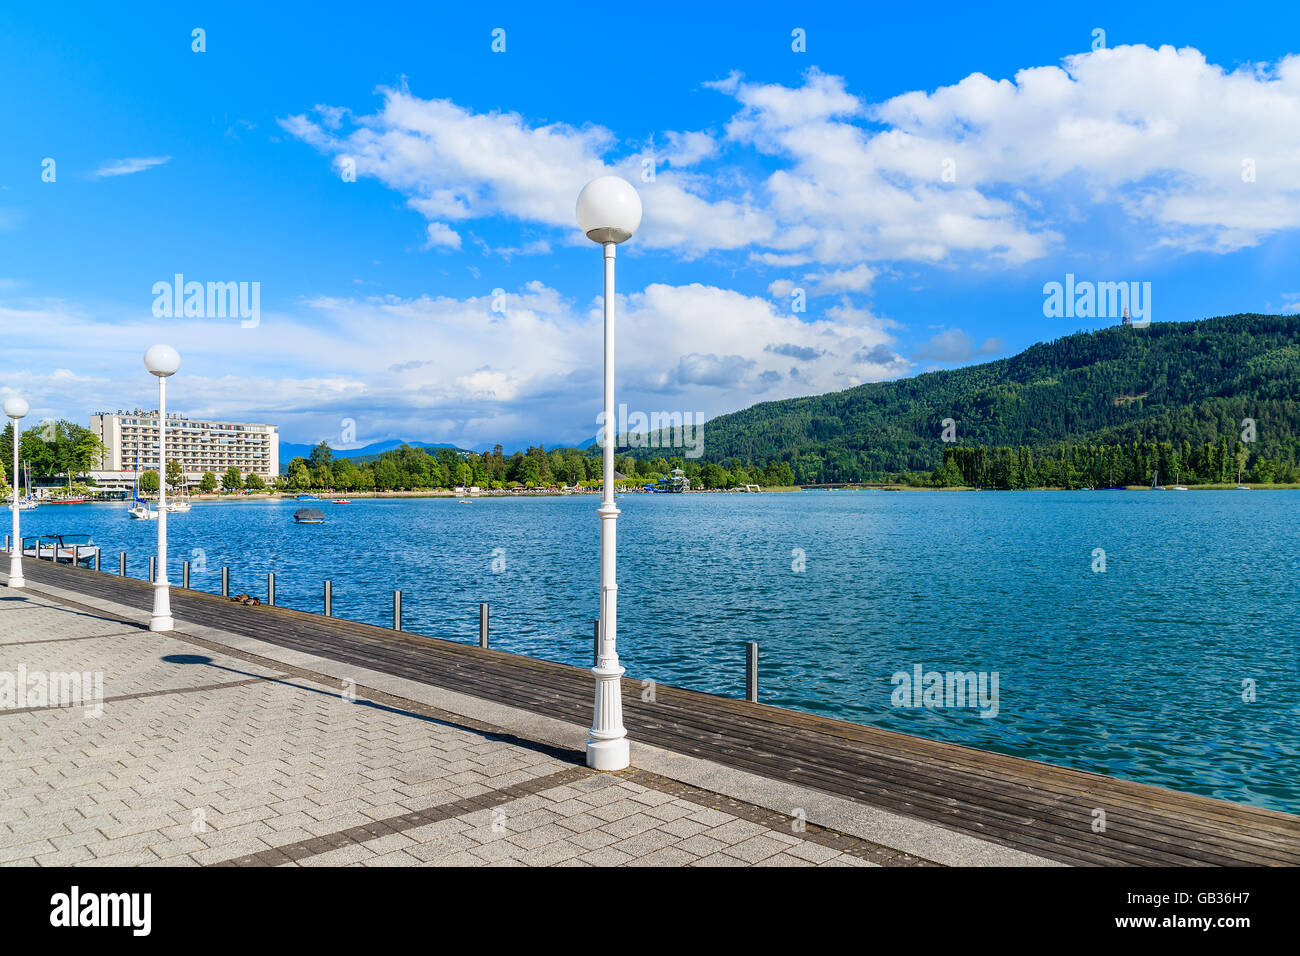 WORTHERSEE LAKE, AUSTRIA - JUN 20, 2015: promenade along Worthersee lake shore during summer time, Austria. Stock Photo